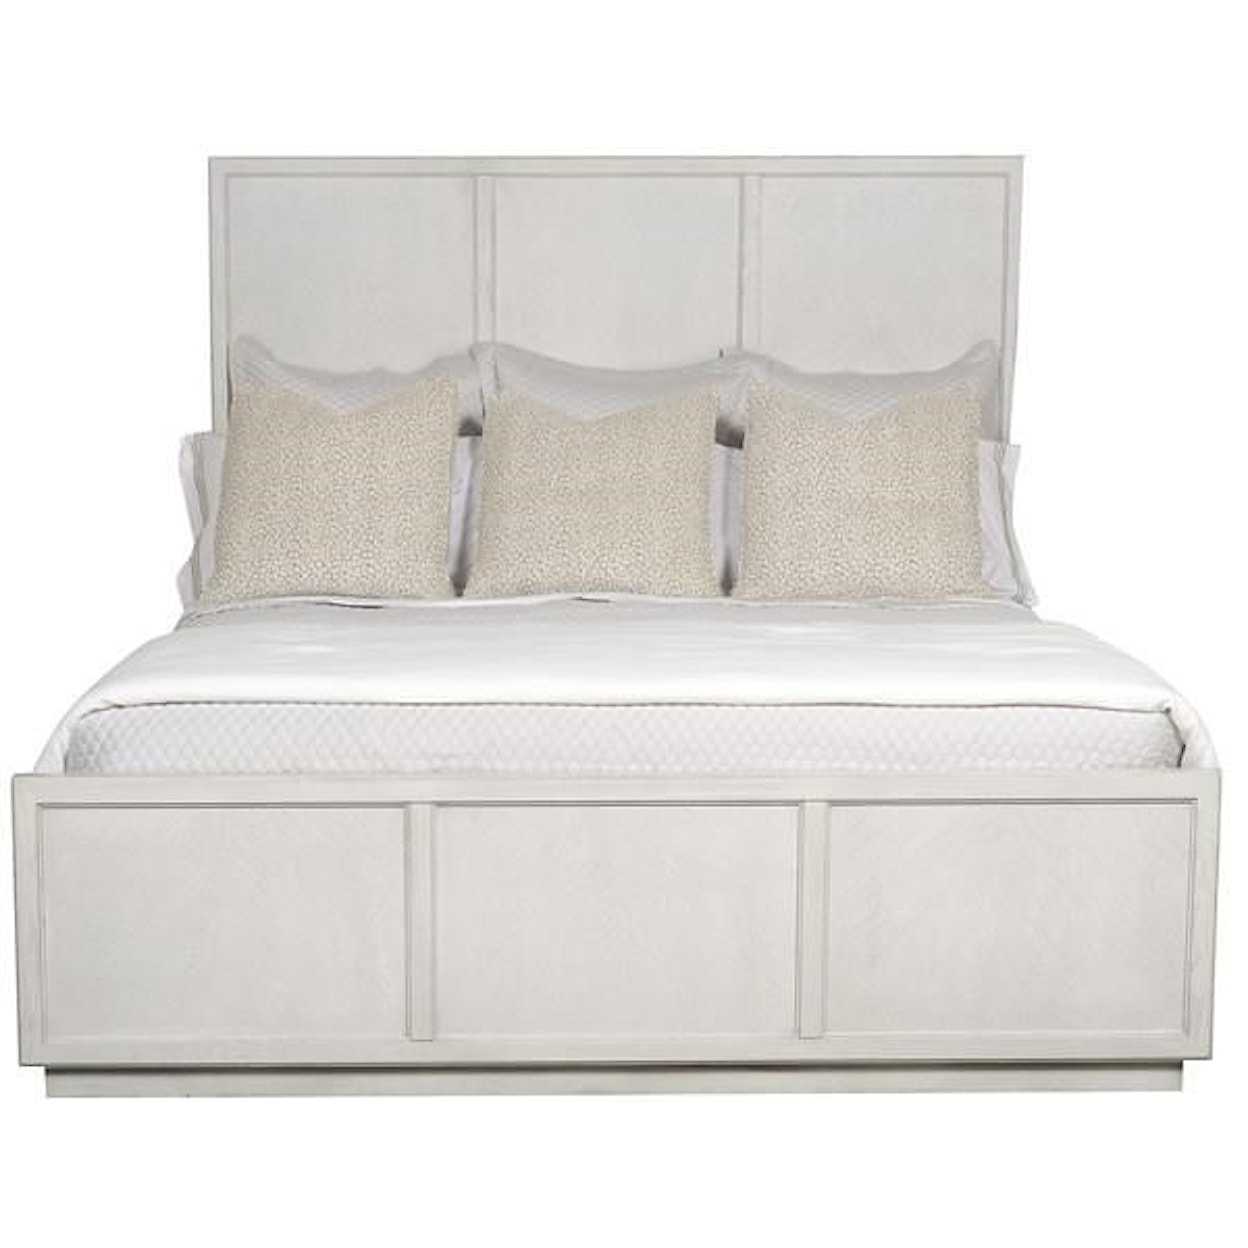 Vanguard Furniture Munroe King Bed